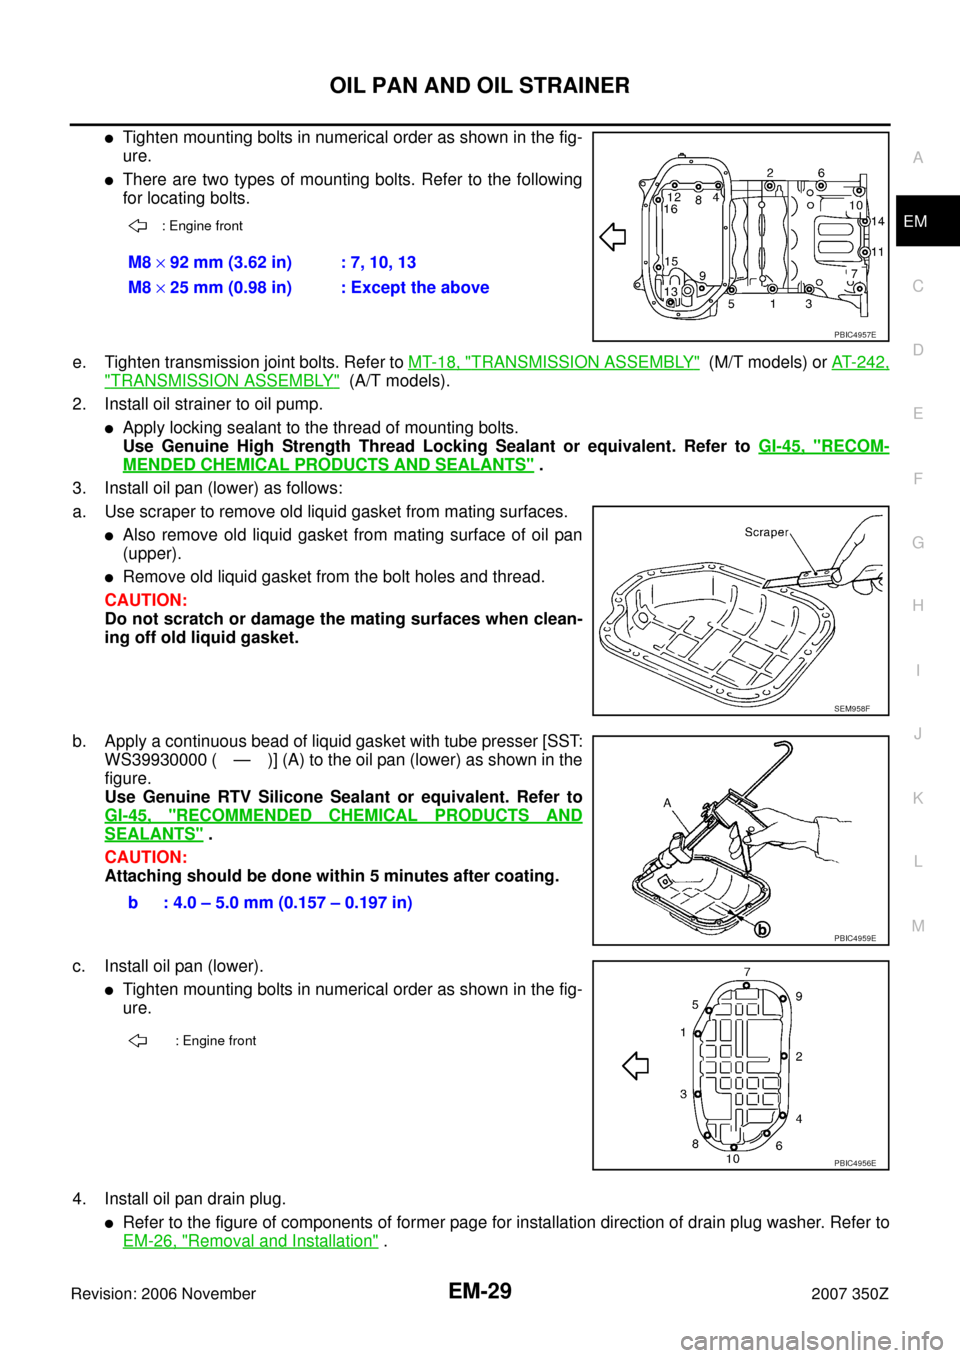 NISSAN 350Z 2007 Z33 Engine Mechanical Owners Manual OIL PAN AND OIL STRAINER
EM-29
C
D
E
F
G
H
I
J
K
L
MA
EM
Revision: 2006 November2007 350Z
Tighten mounting bolts in numerical order as shown in the fig-
ure.
There are two types of mounting bolts. R